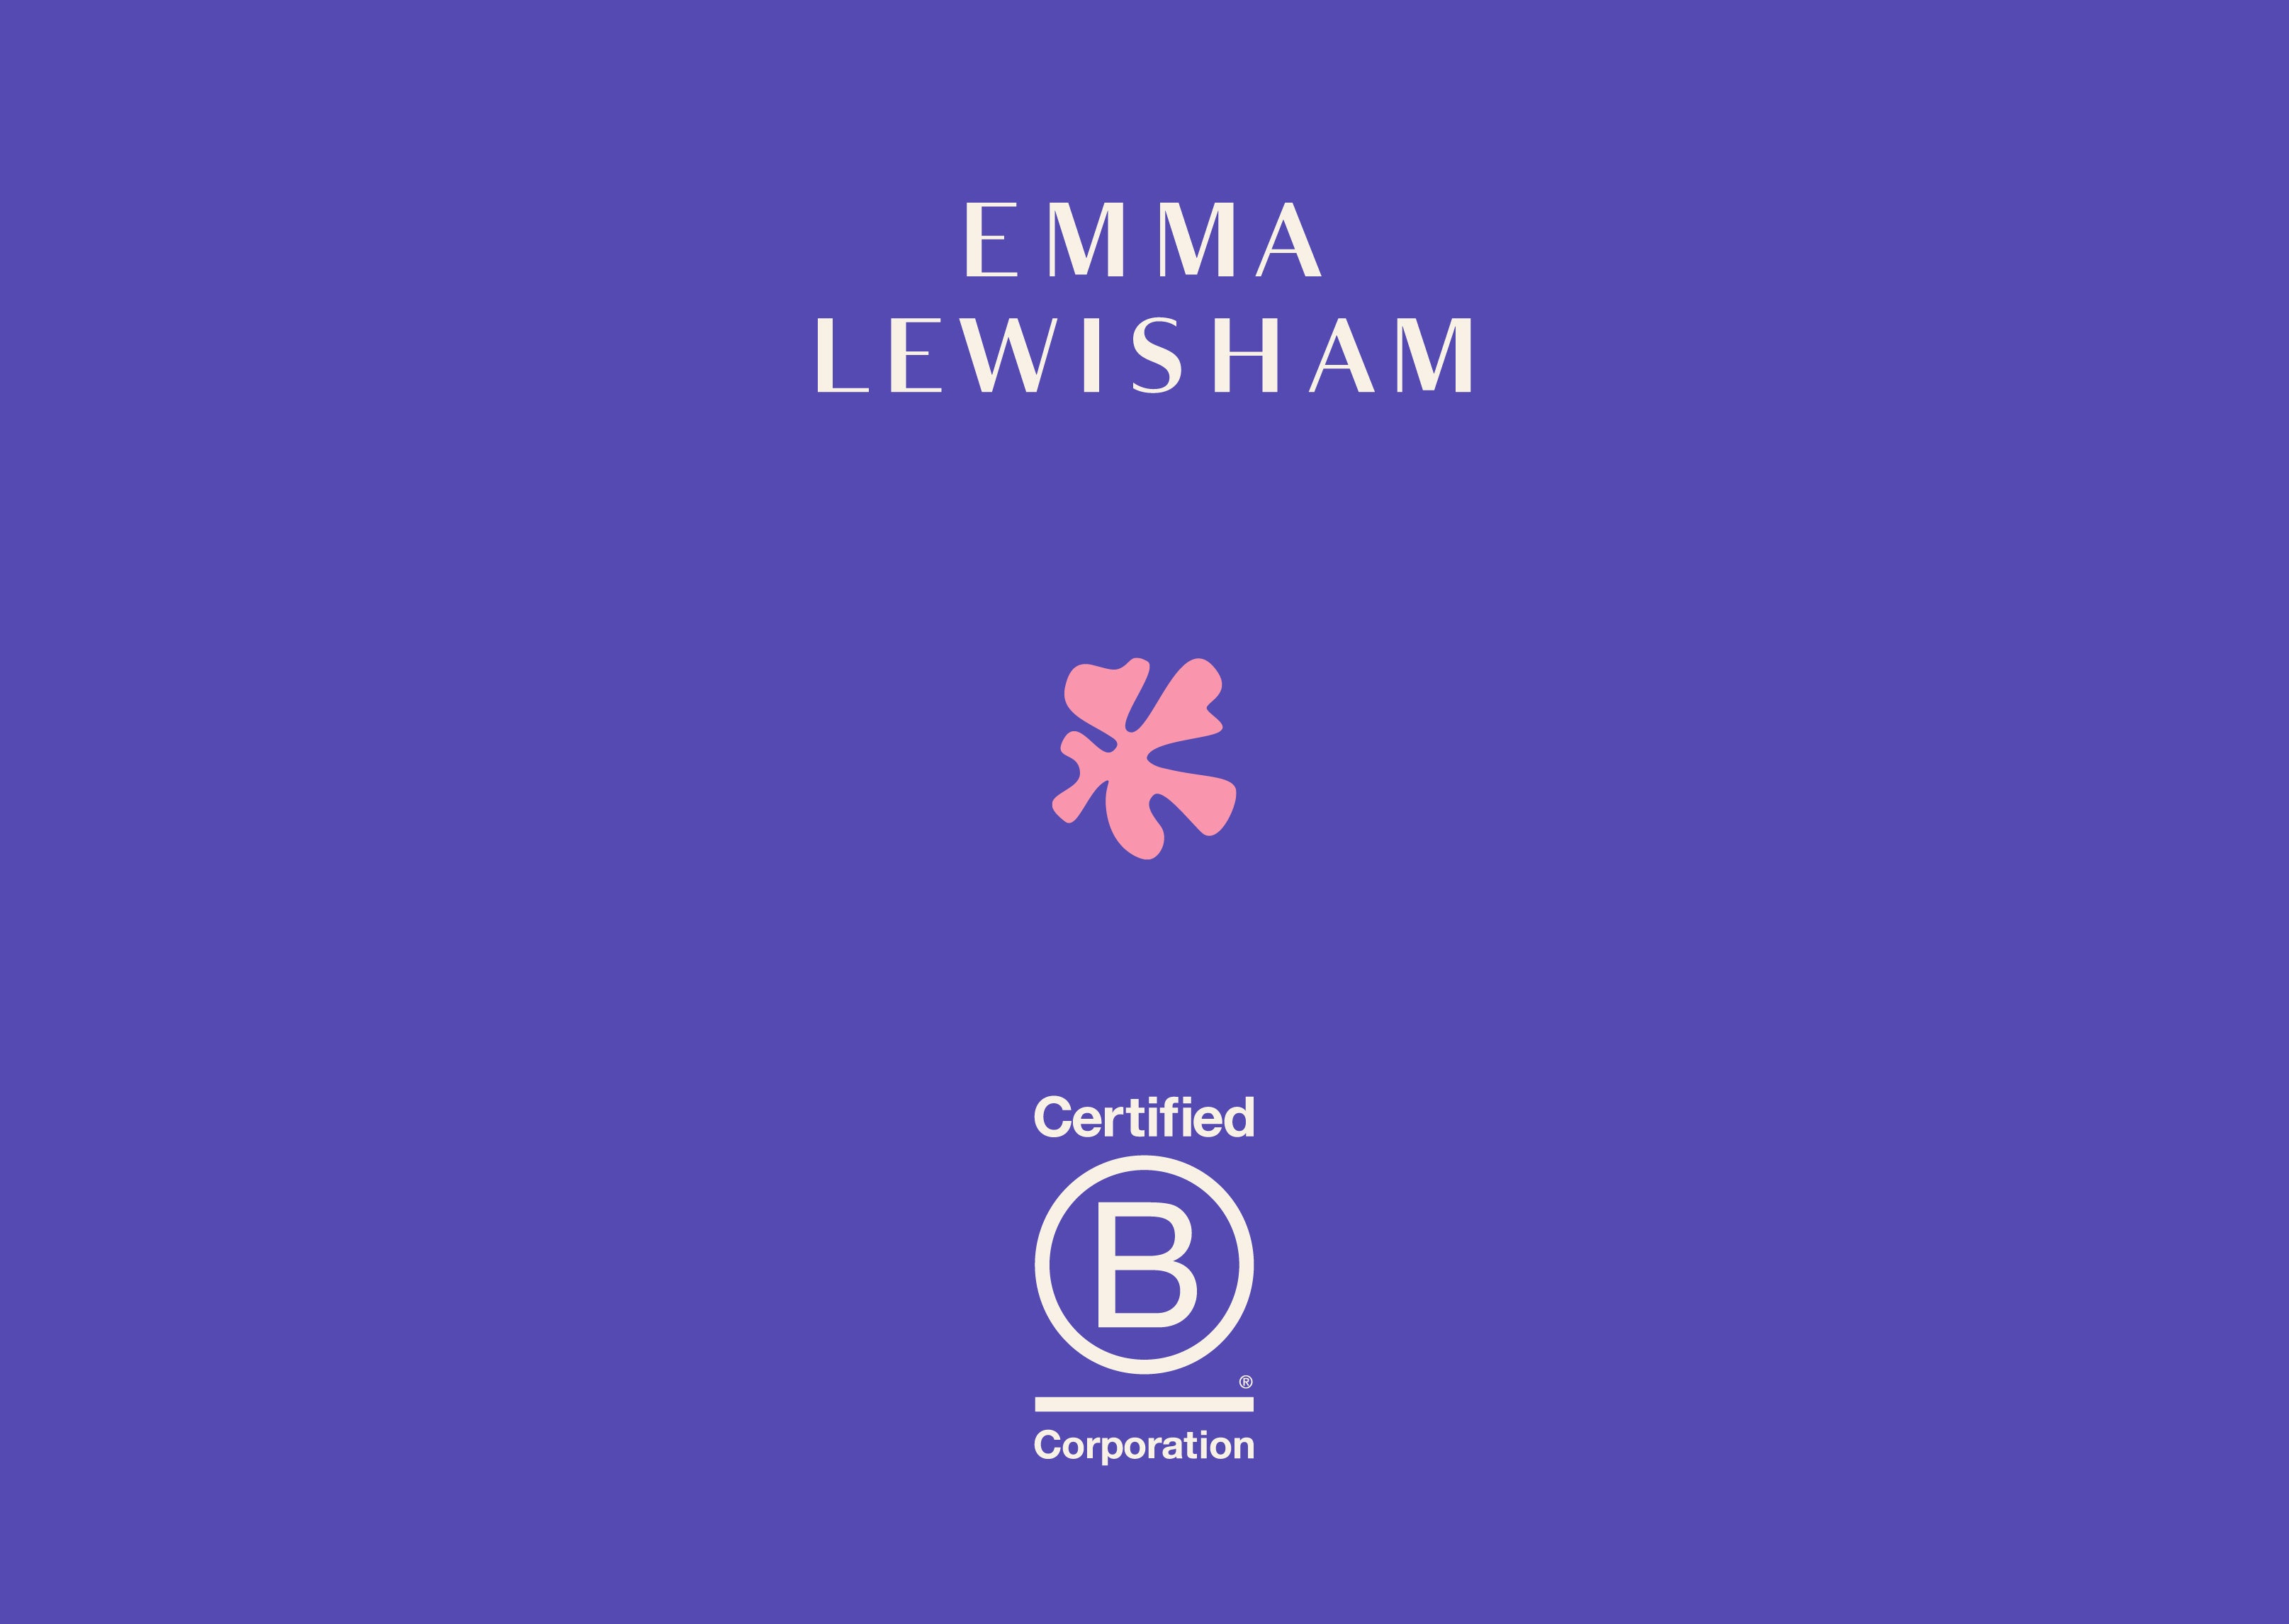 Emma Lewisham is B Corp Certified